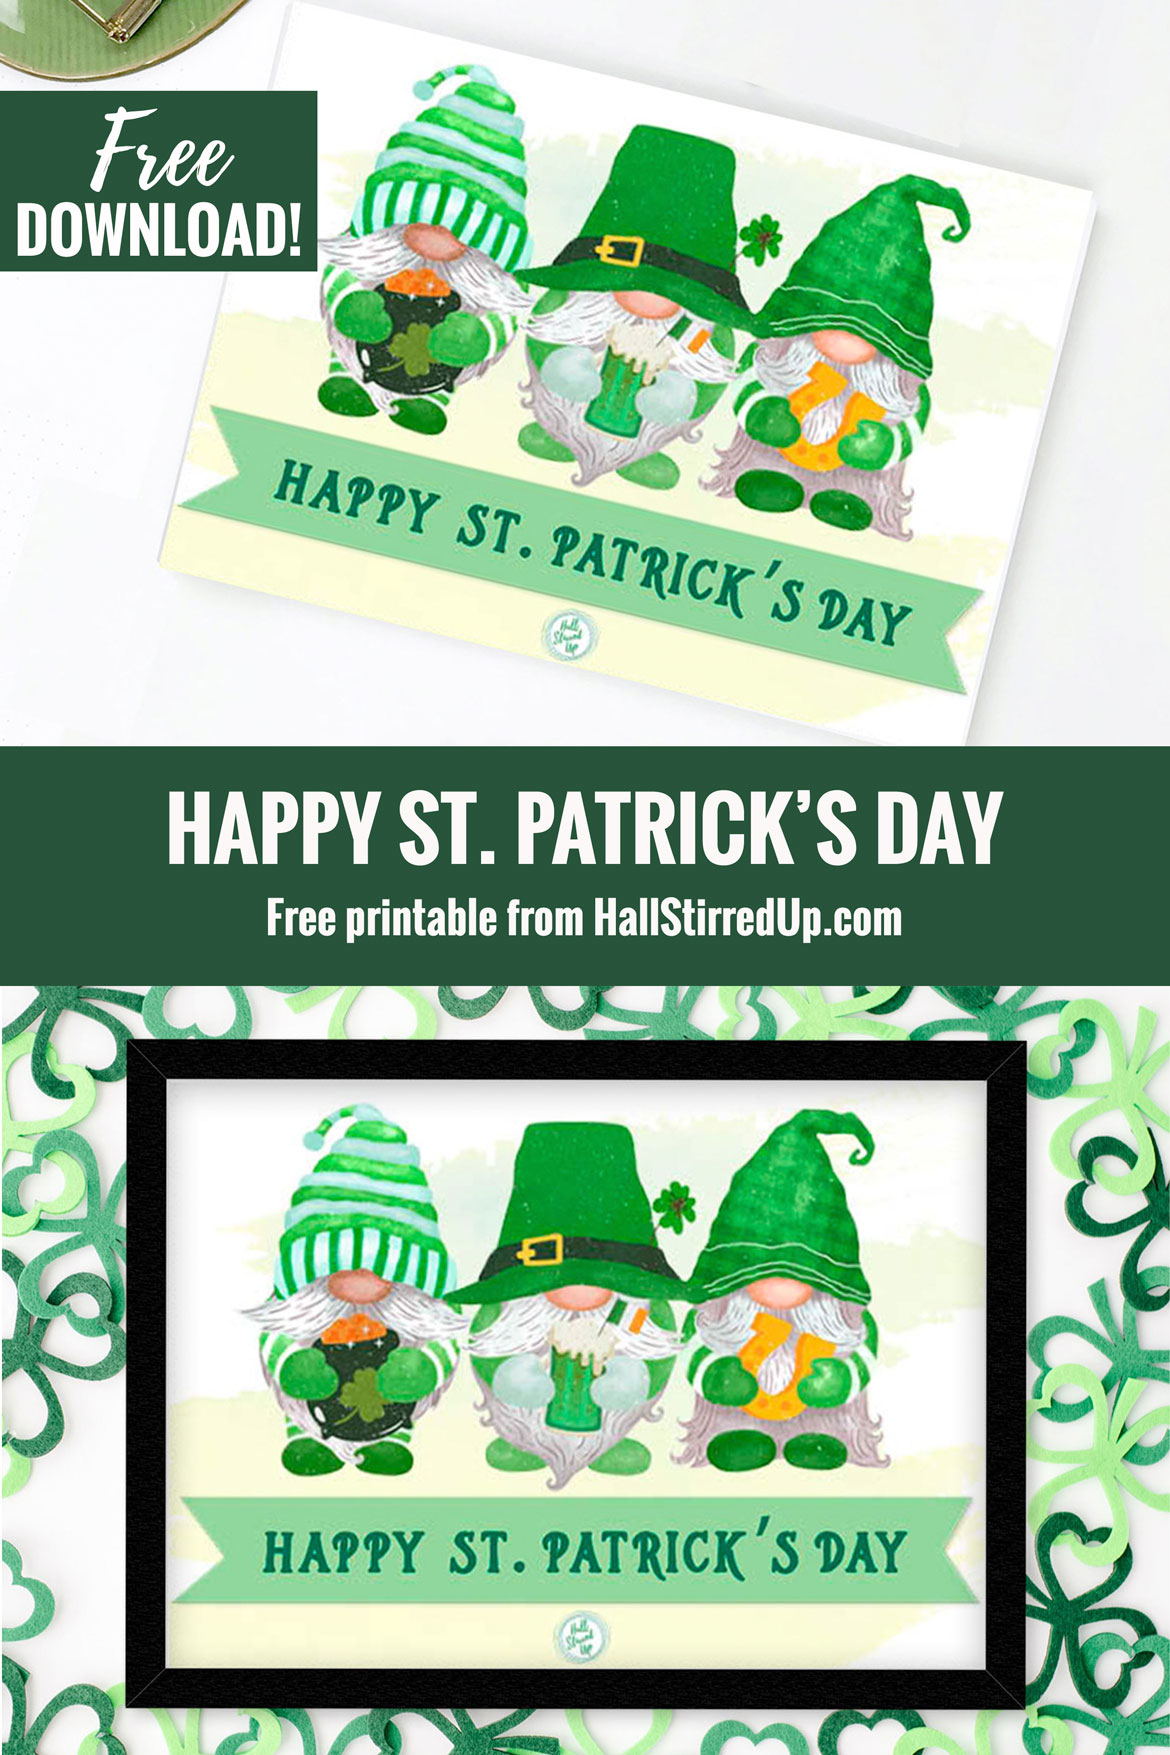 It's a festive St. Patrick's Day free printable